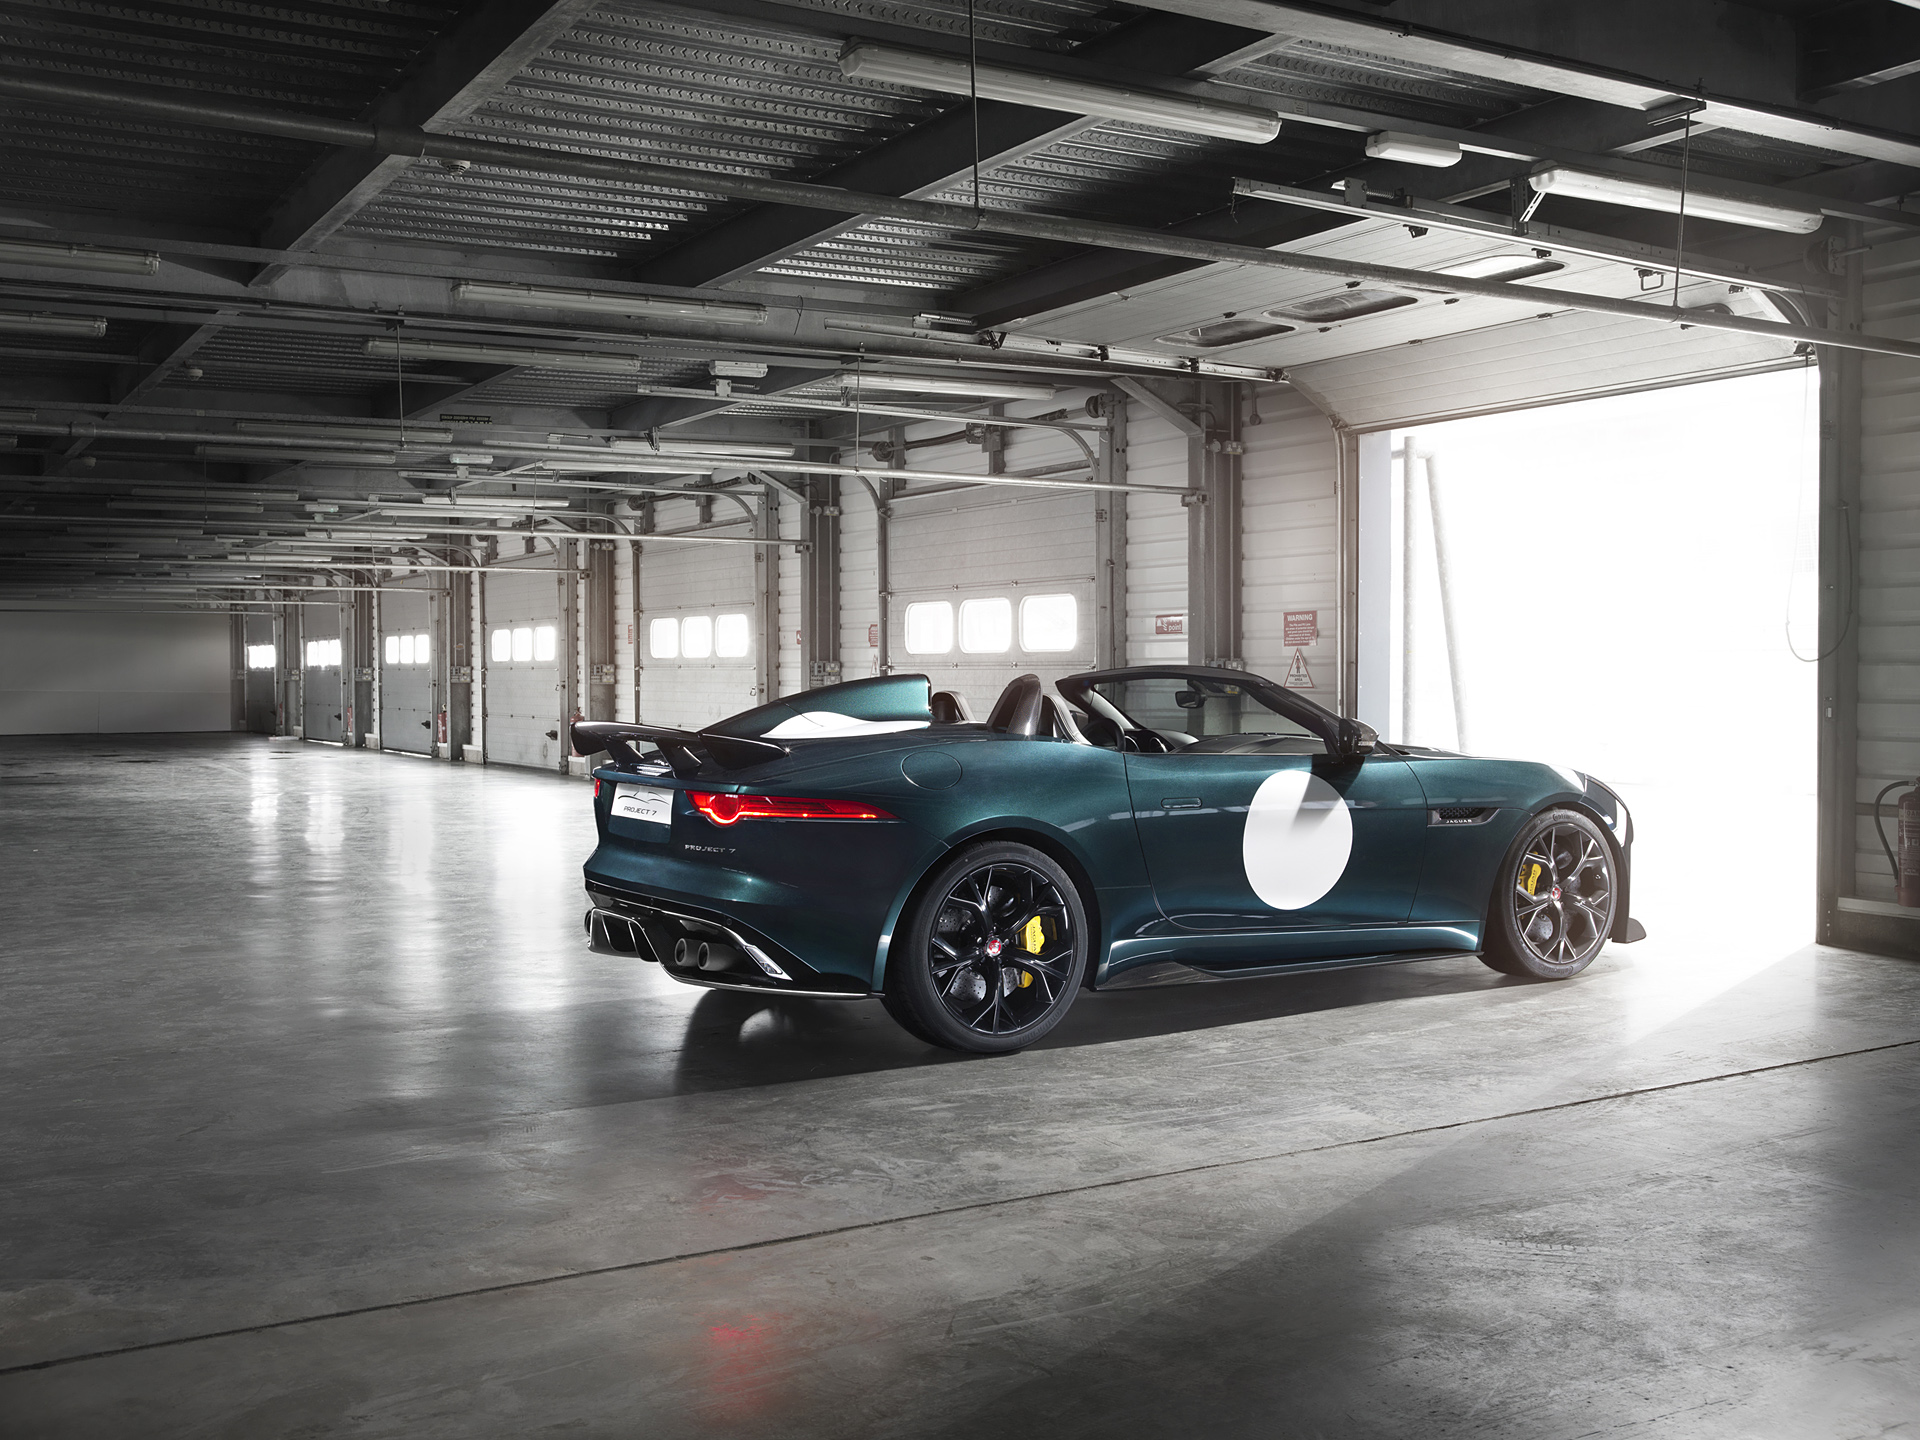  2015 Jaguar F-Type Project 7 Wallpaper.